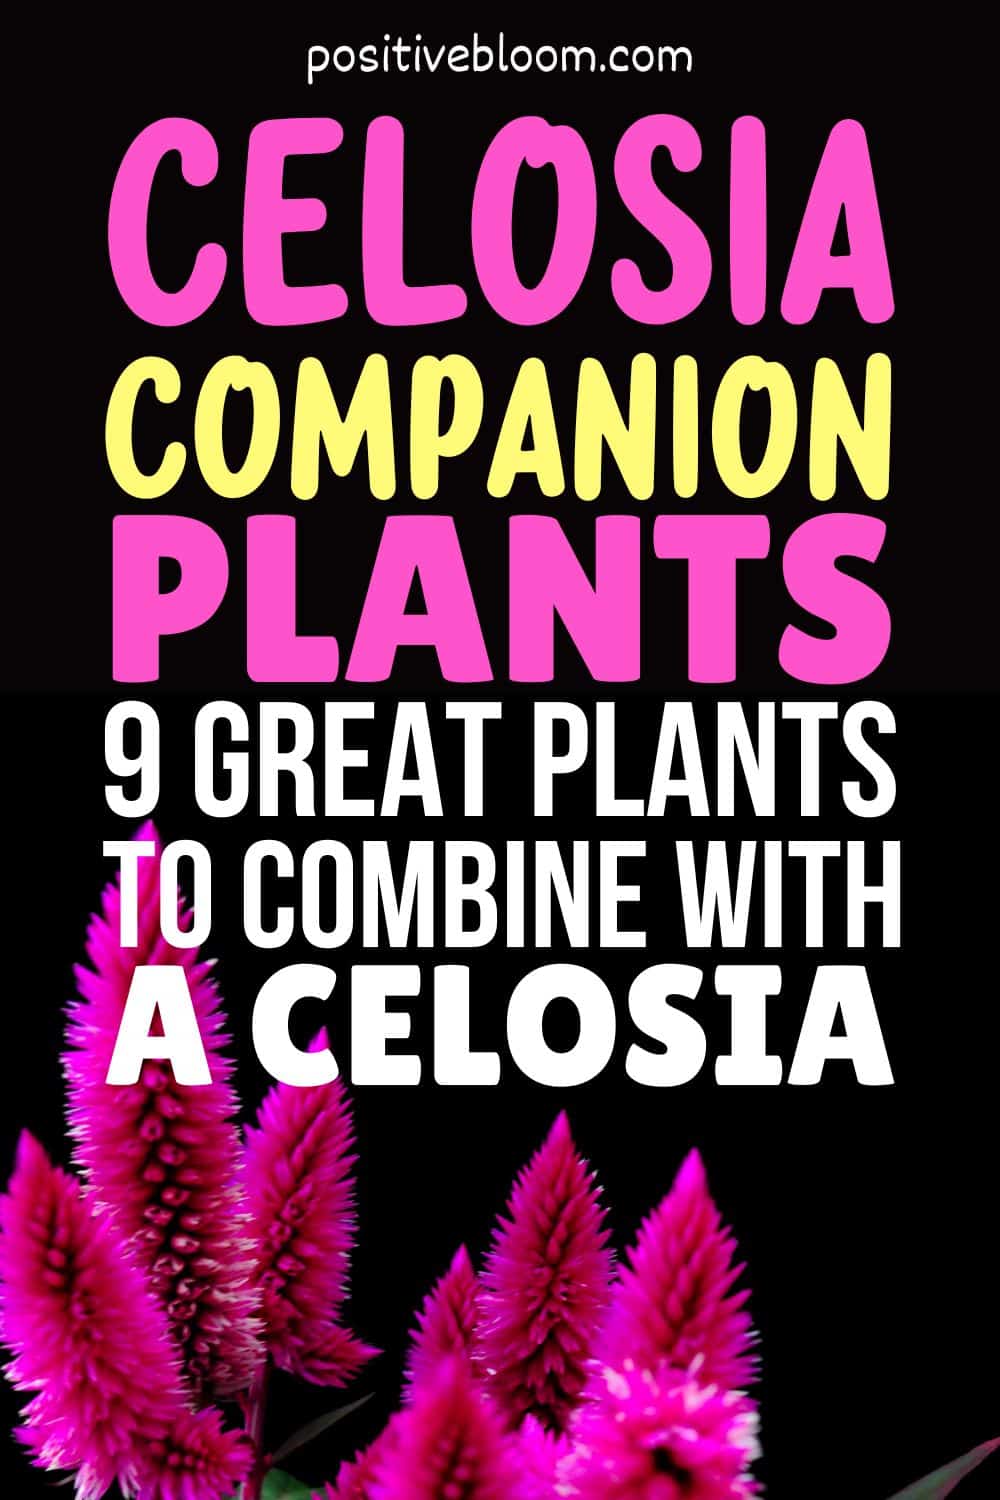 Celosia Companion Plants - 9 Great Plants To Combine With A Celosia Pinterest